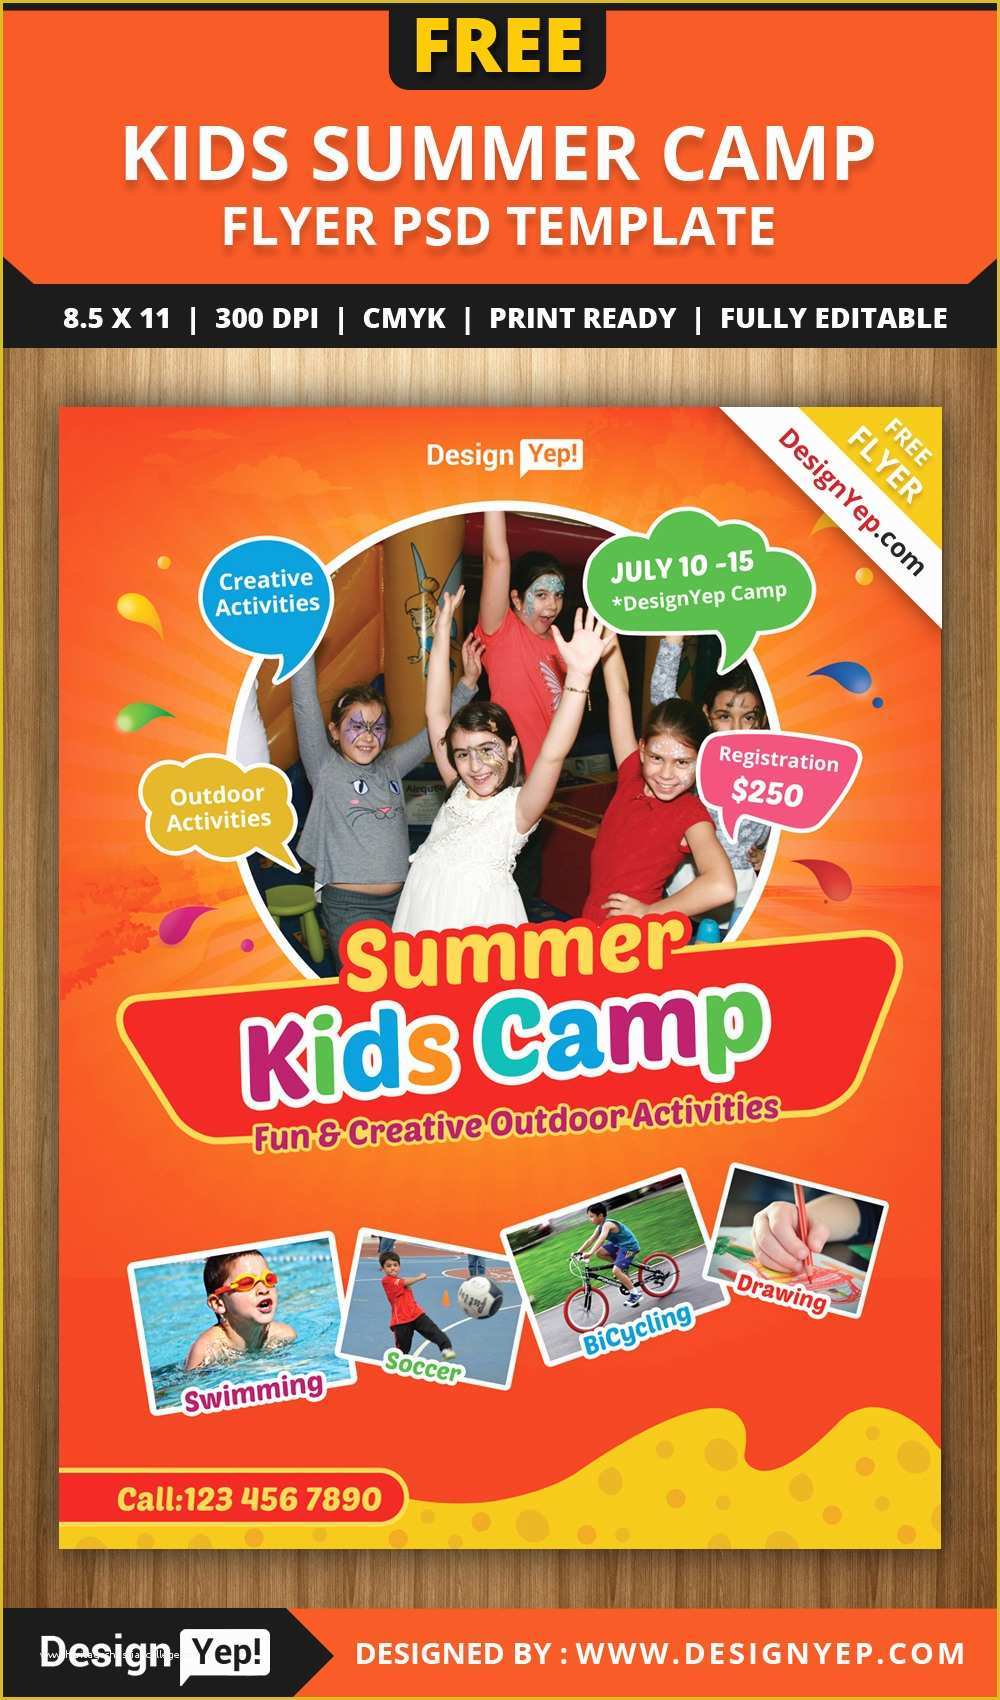 Free Summer Camp Schedule Template Of Free Kids Summer Camp Flyer Psd Template On Behance